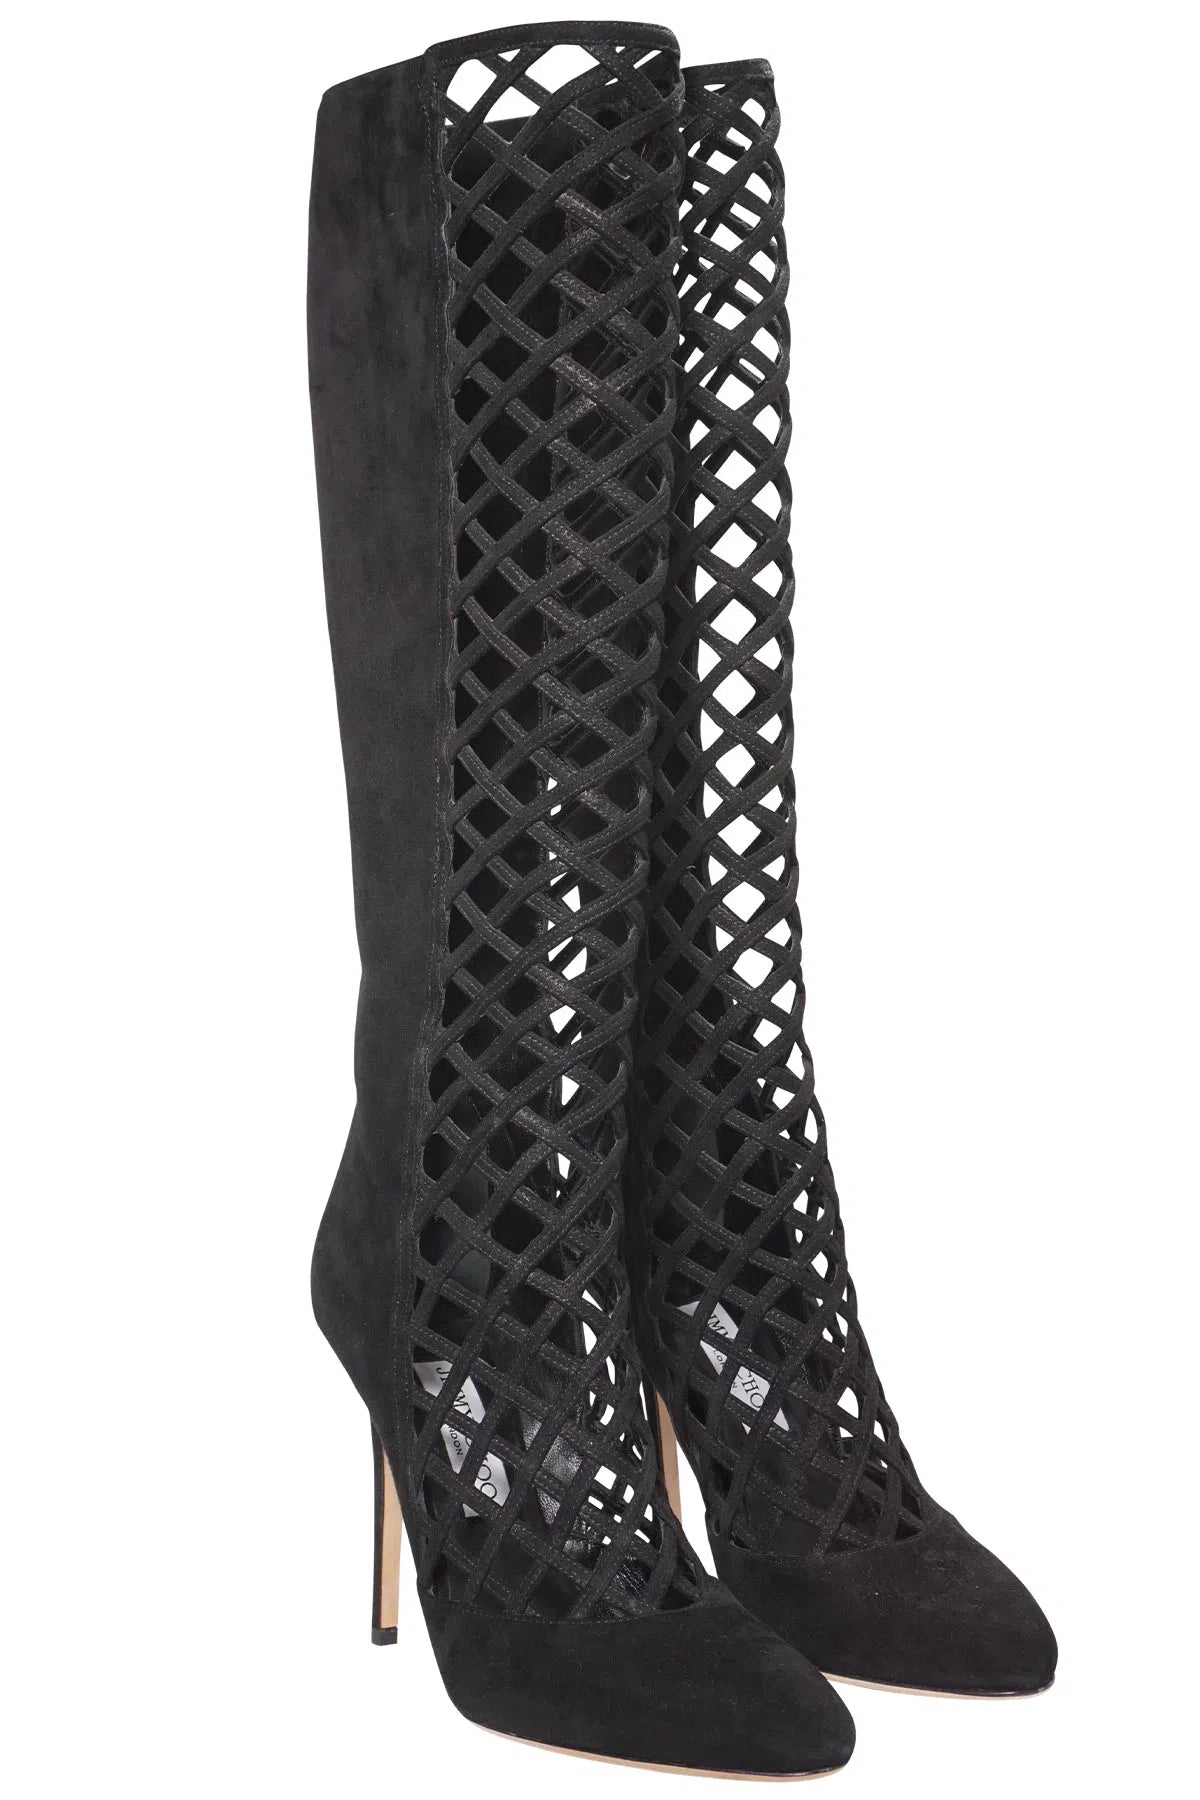 Jimmy Choo Black Suede Delta Lattice Knee Boots Size 38 - Foxy Couture Carmel